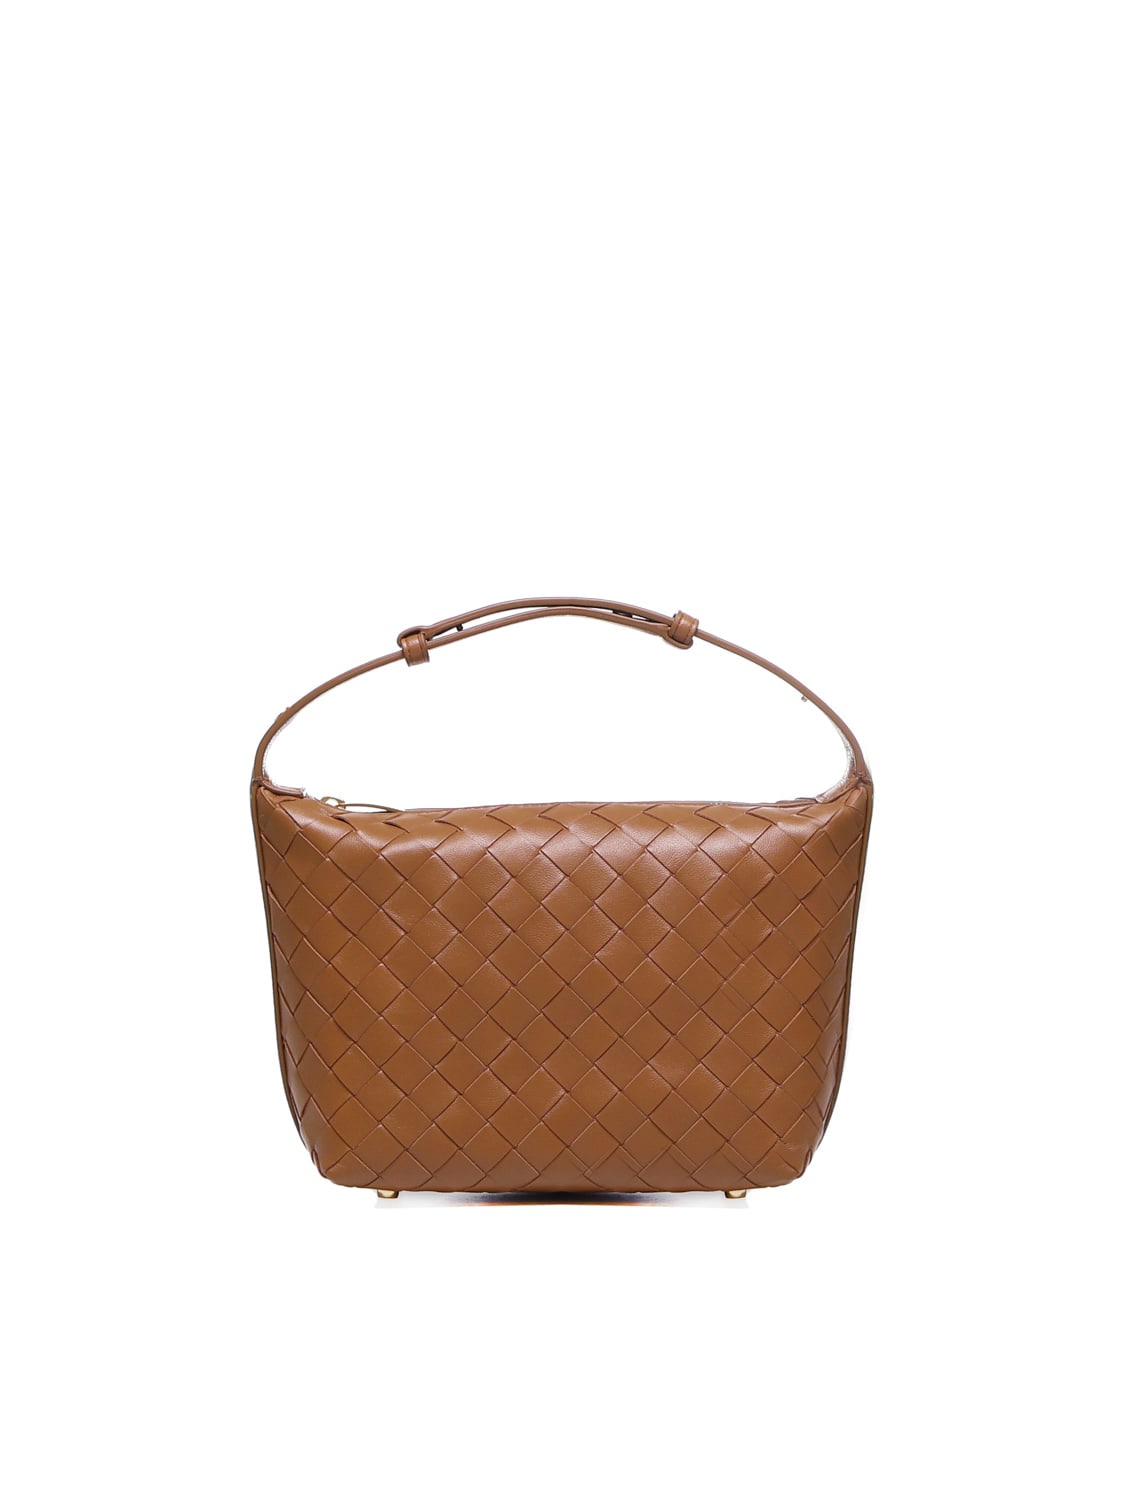 Bottega Veneta Women's Mini Wallace Intrecciato Leather Shoulder Bag